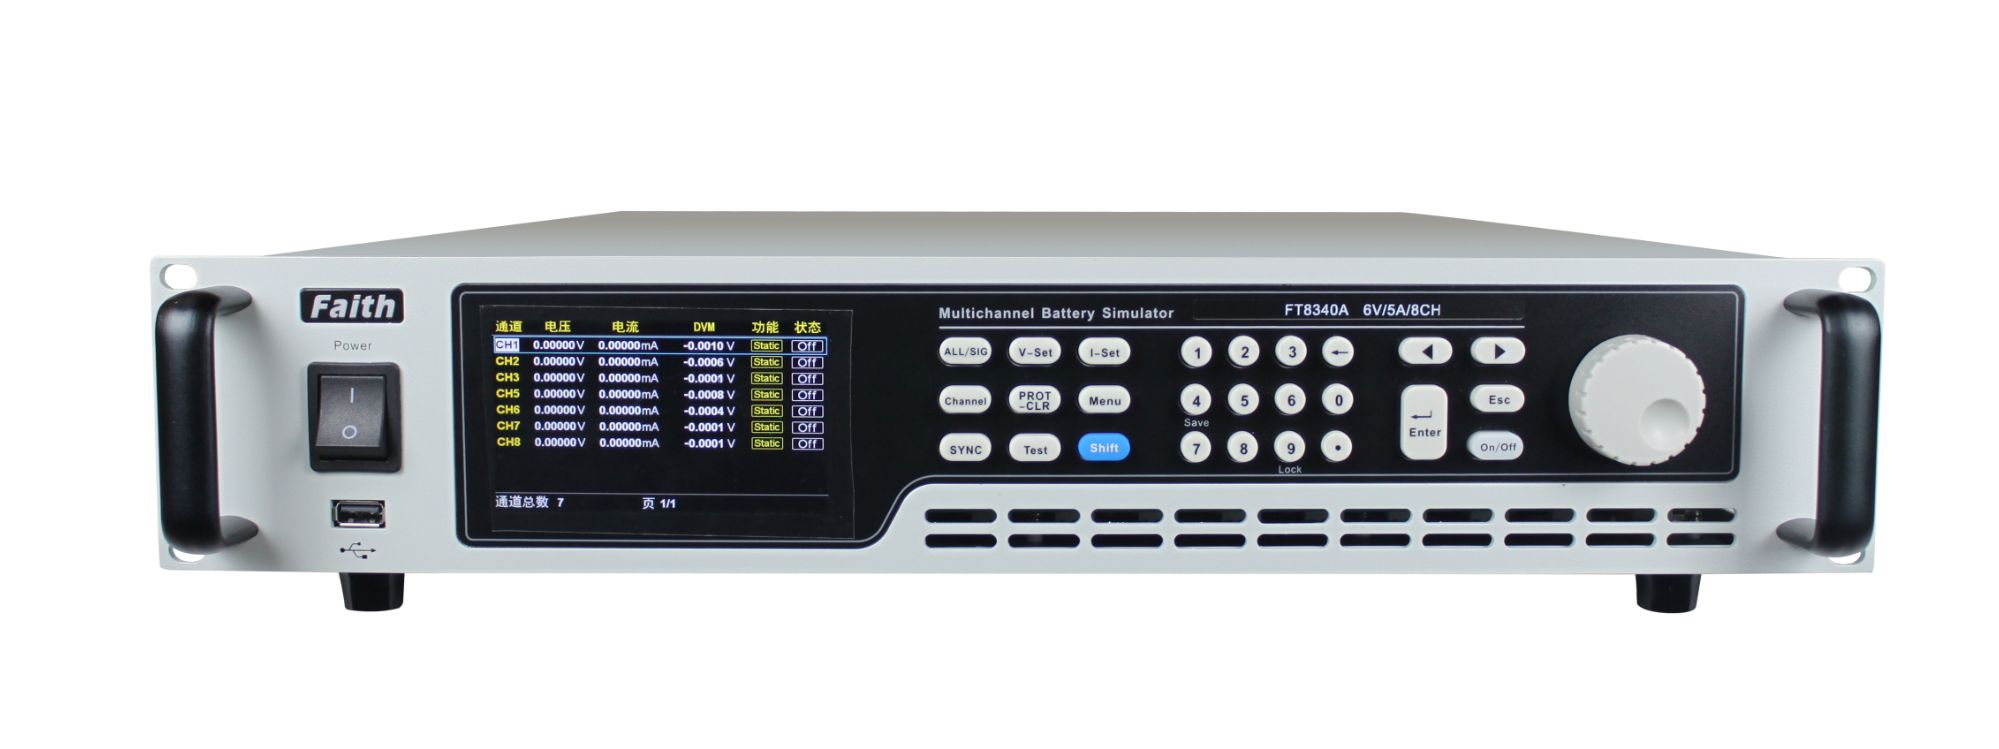 FT8340 multi-channel Bipolar DC Power Supply/Battery Simulator